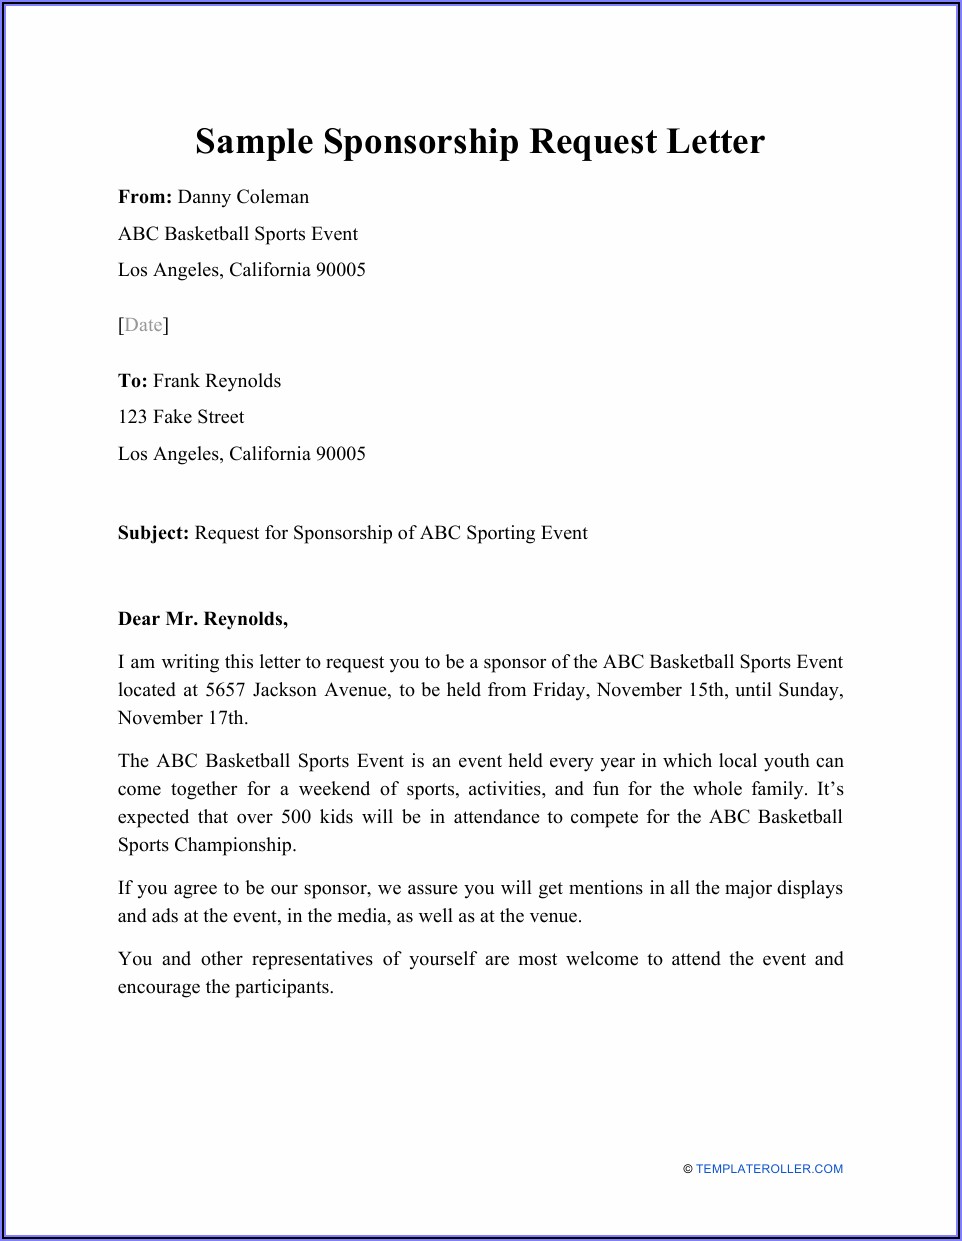 Sample Sponsorship Request Letter For Student